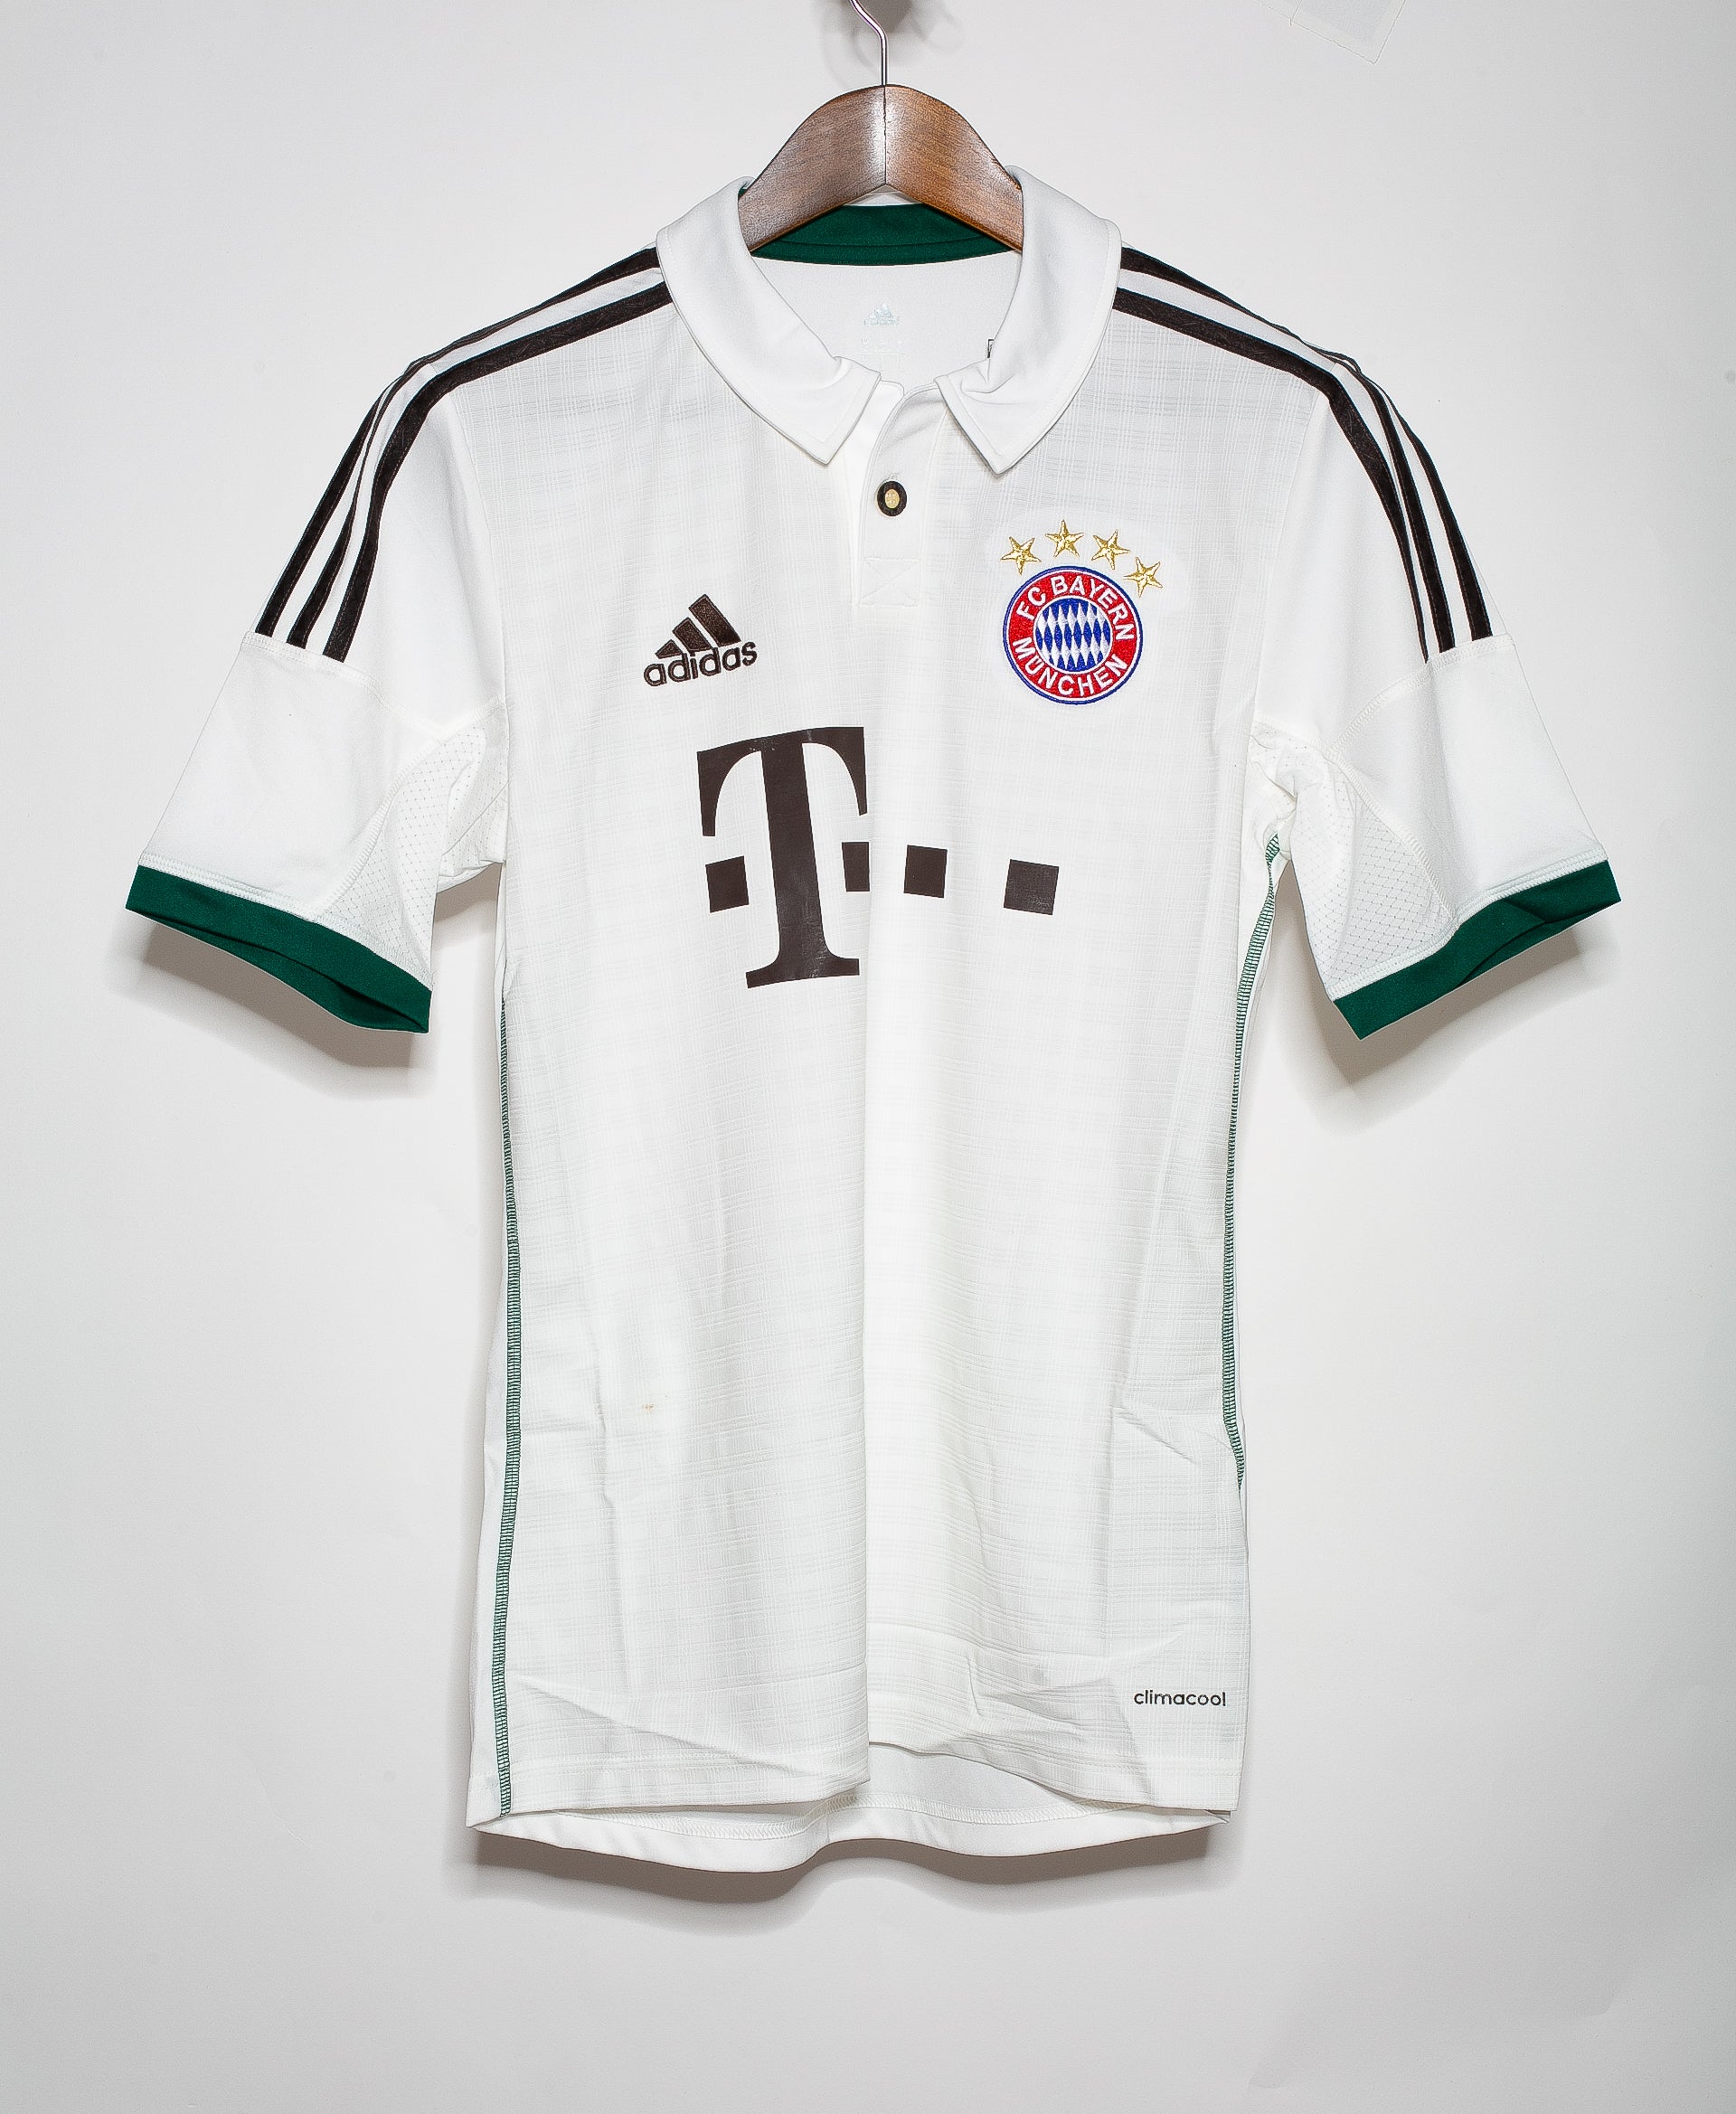 BayernTimes on X: Bayern 14/15 third kit 🤩